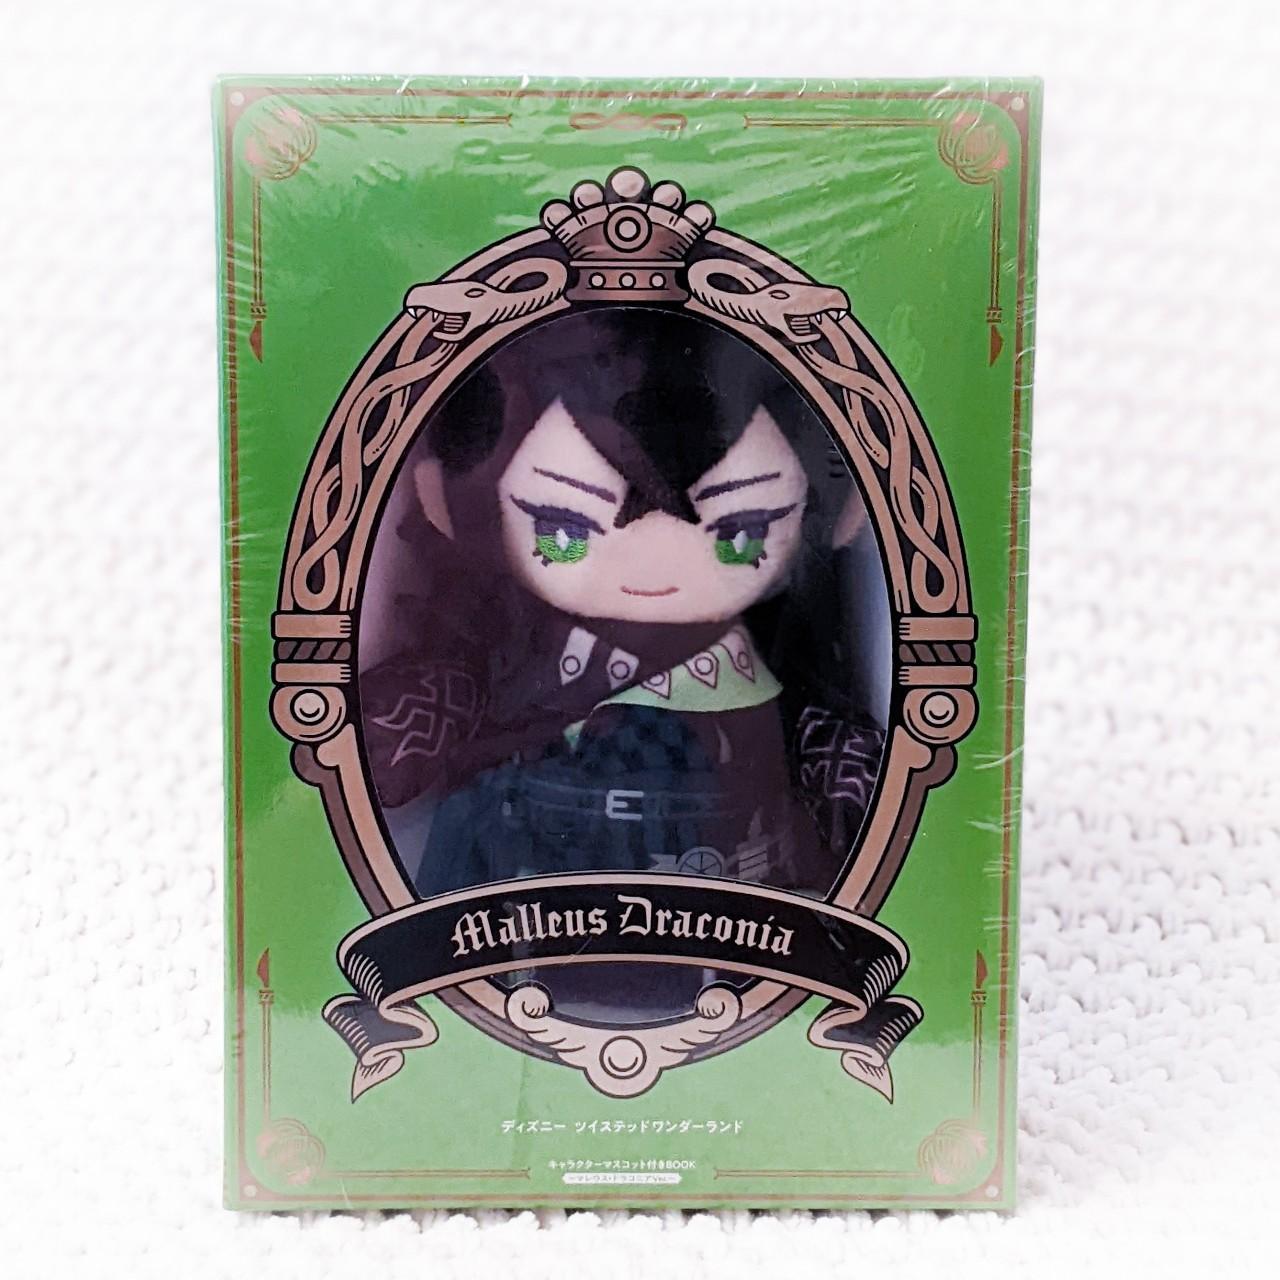 Malleus Draconia Disney Twisted Wonderland Anime Plush Doll & Book